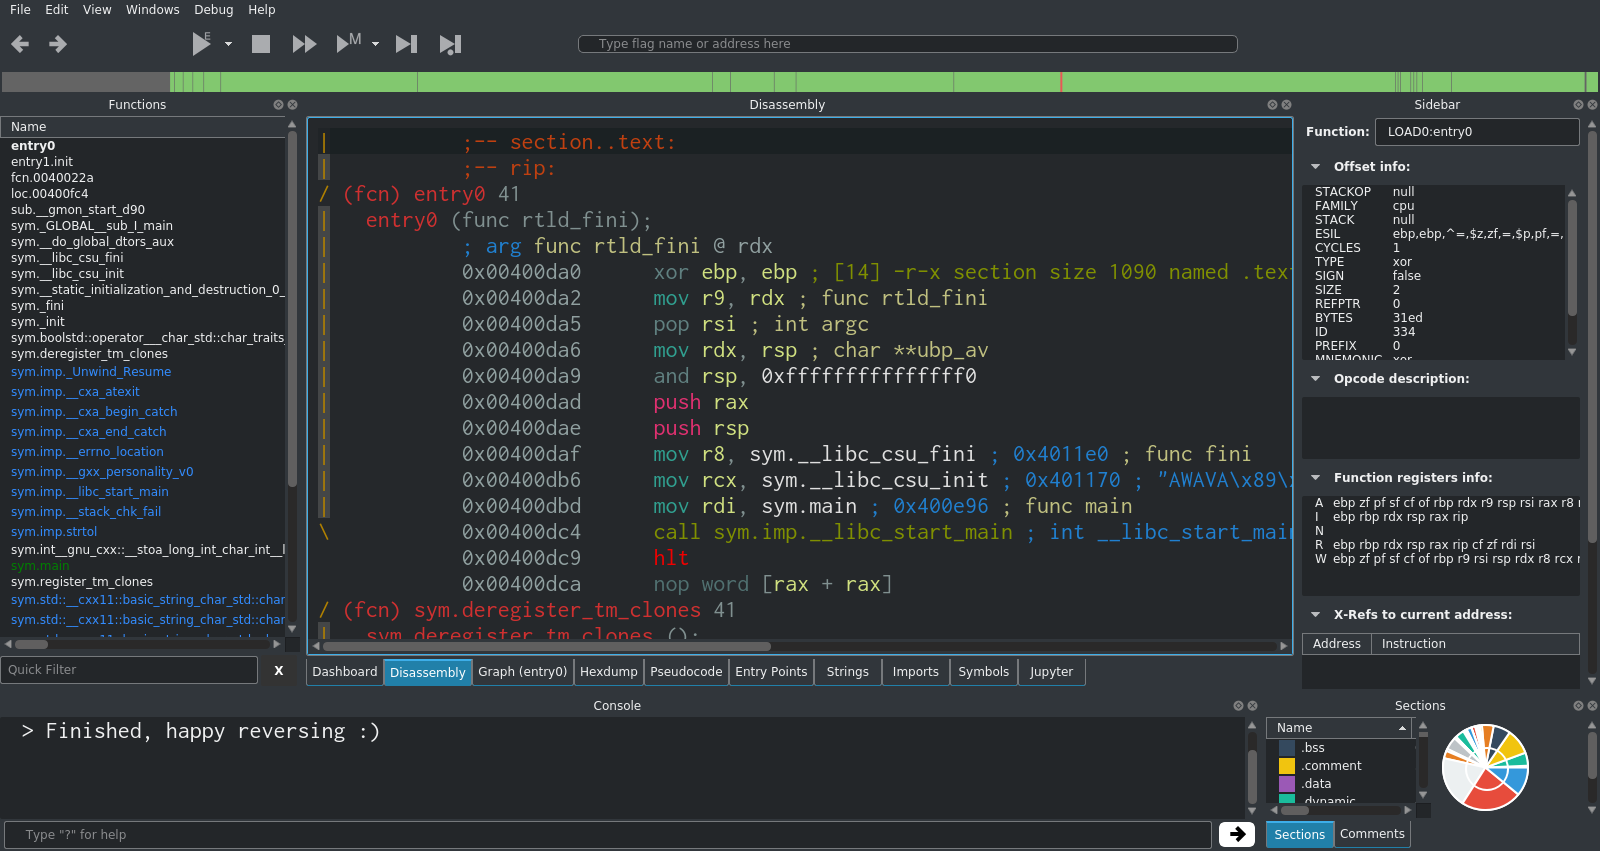 A screenshot of the default Cutter interface when analysing a new file.